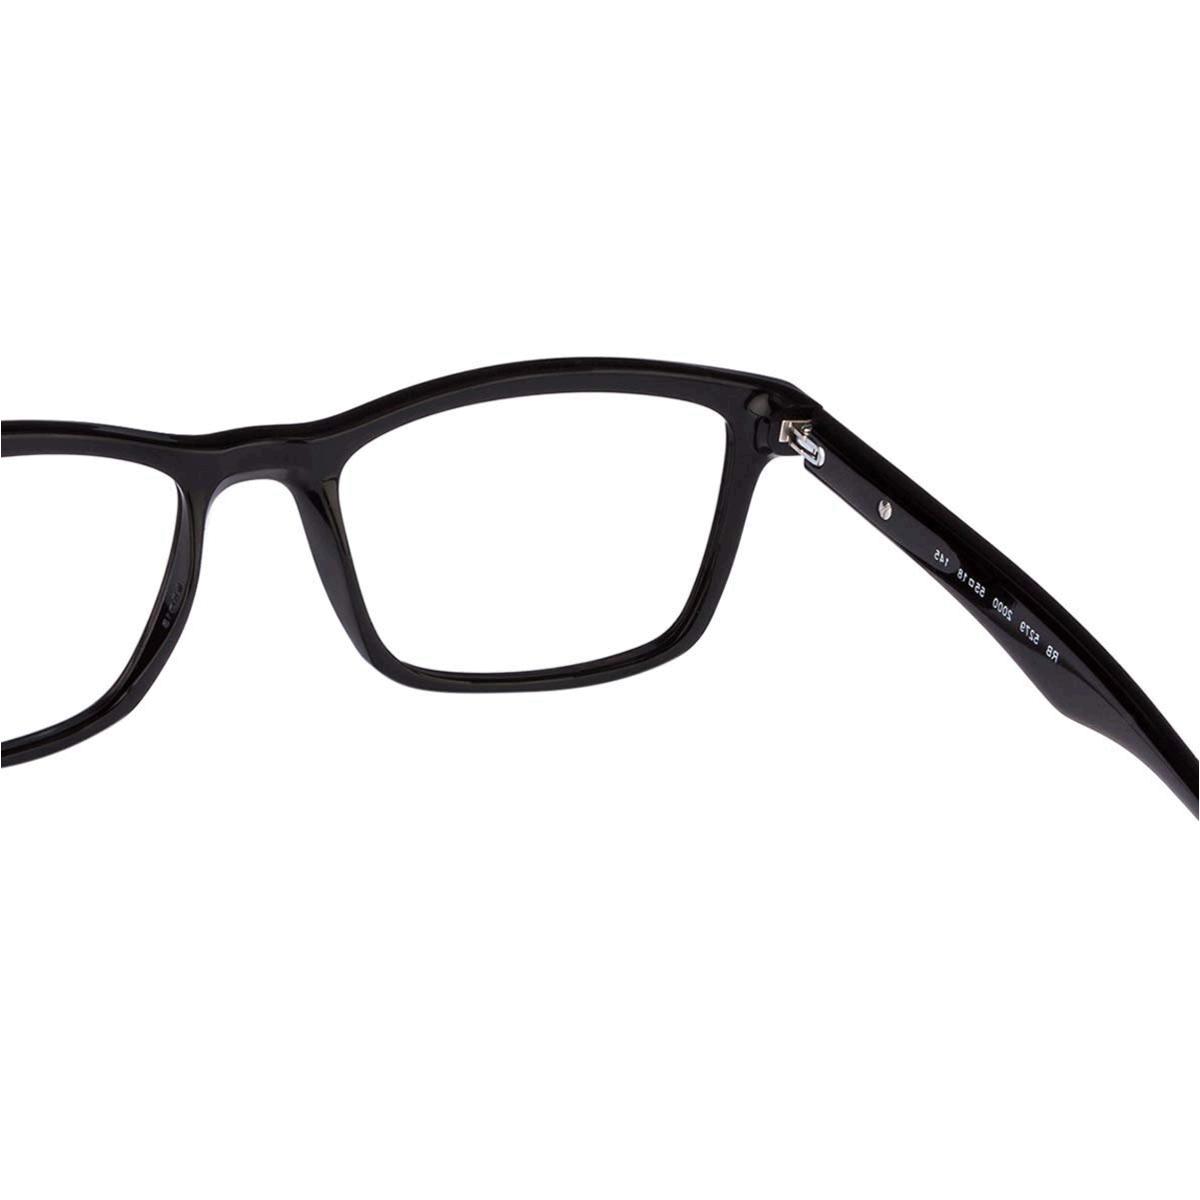 Ray-Ban Men's RX5279 Eyeglasses Shiny Black 55mm, Shiny Black, Size 55 ...